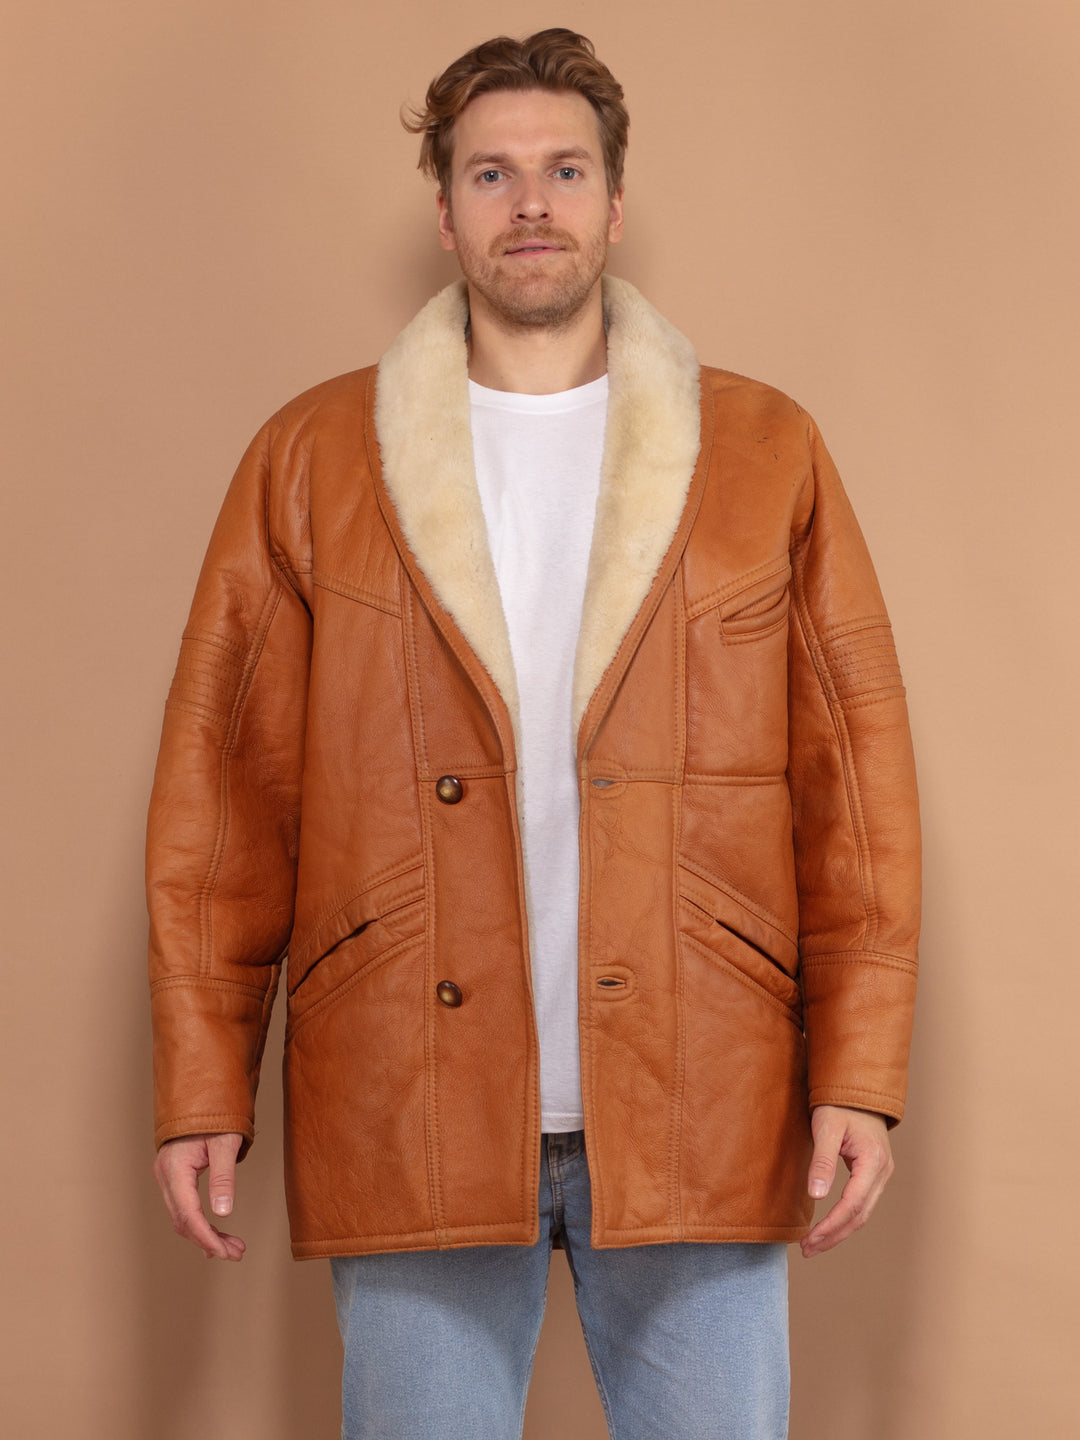 Men Shearling Coat 80s, Size Large, Vintage Sheepskin Coat, Warm Winter Leather Coat, Brown Oversized Coat, Gift For Husband